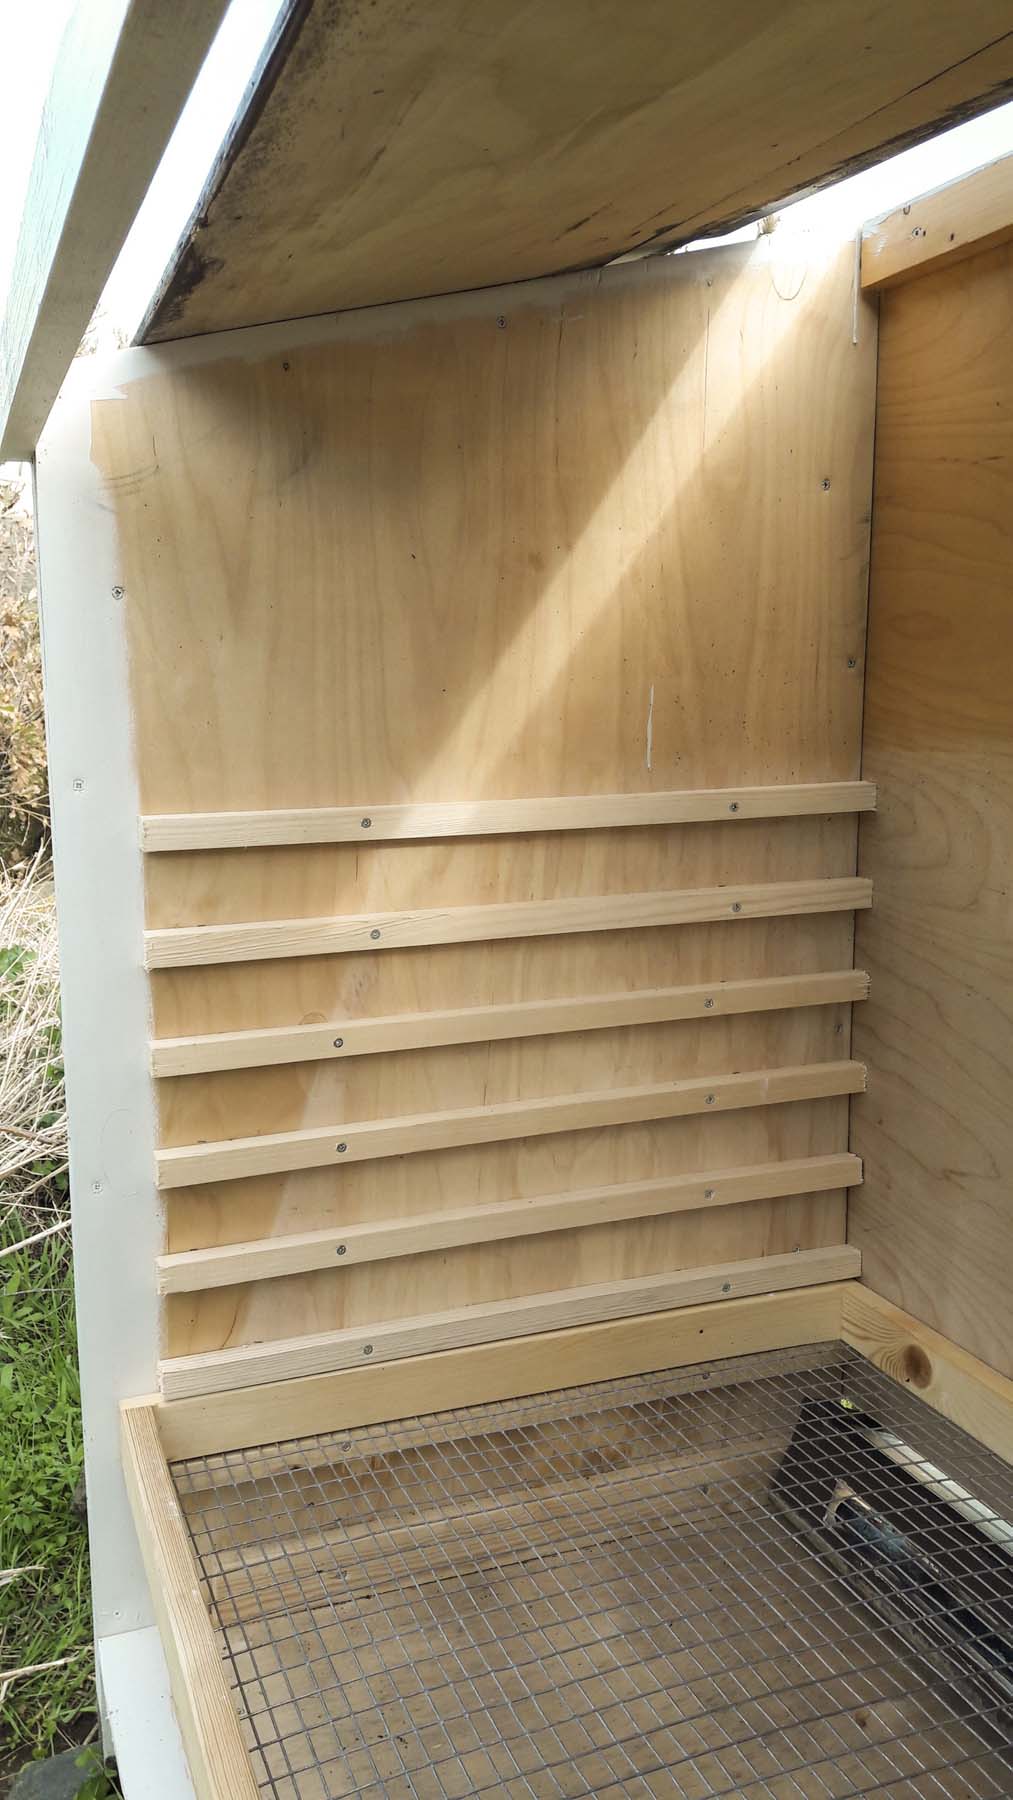 Solar Herb Dryer (Dehydrator) DIY – Tinos Eco Lodge